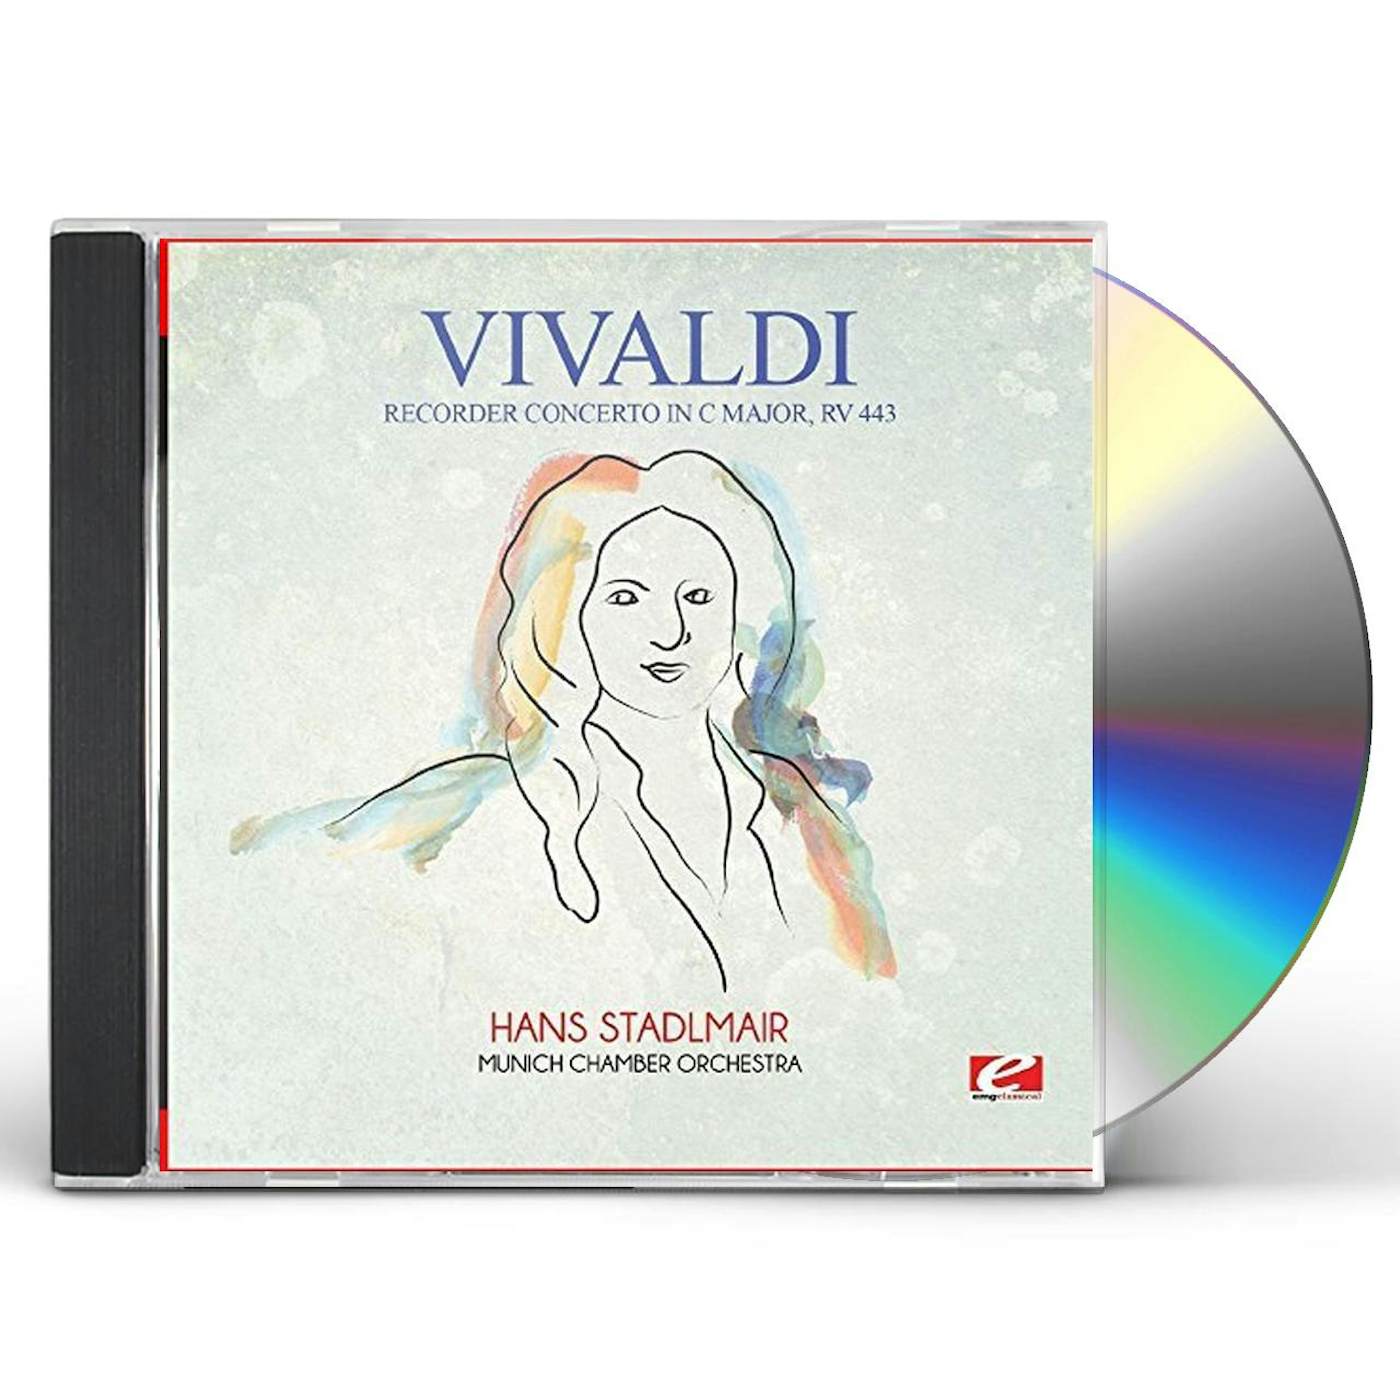 Antonio Vivaldi RECORDER CONCERTO IN C MAJOR RV 443 CD